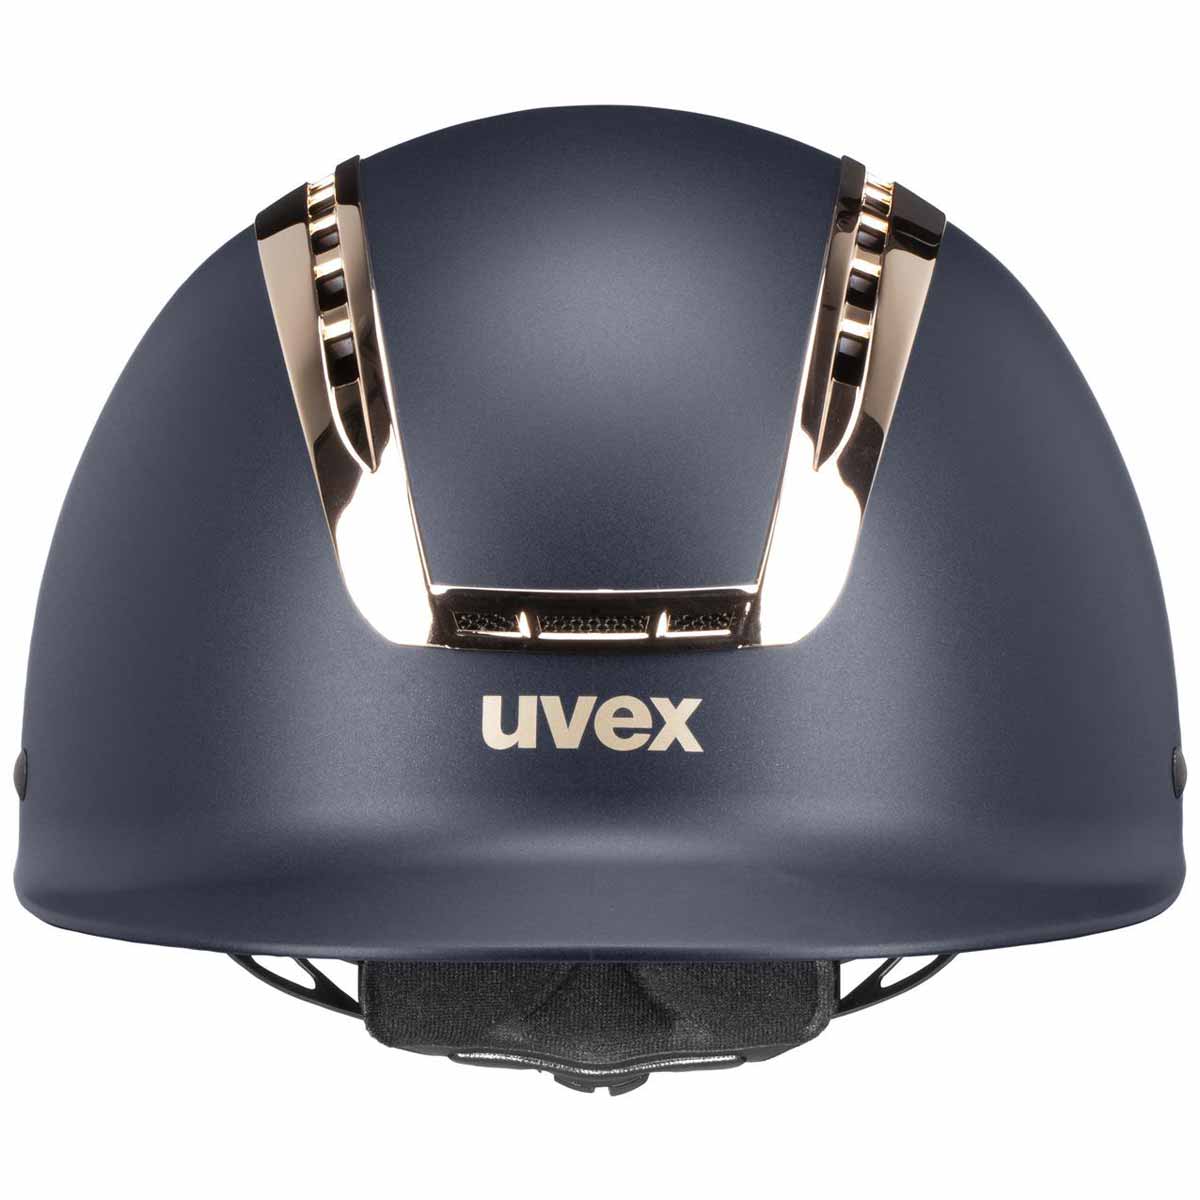 uvex suxxeed chrome riding helmet black mat - silver S